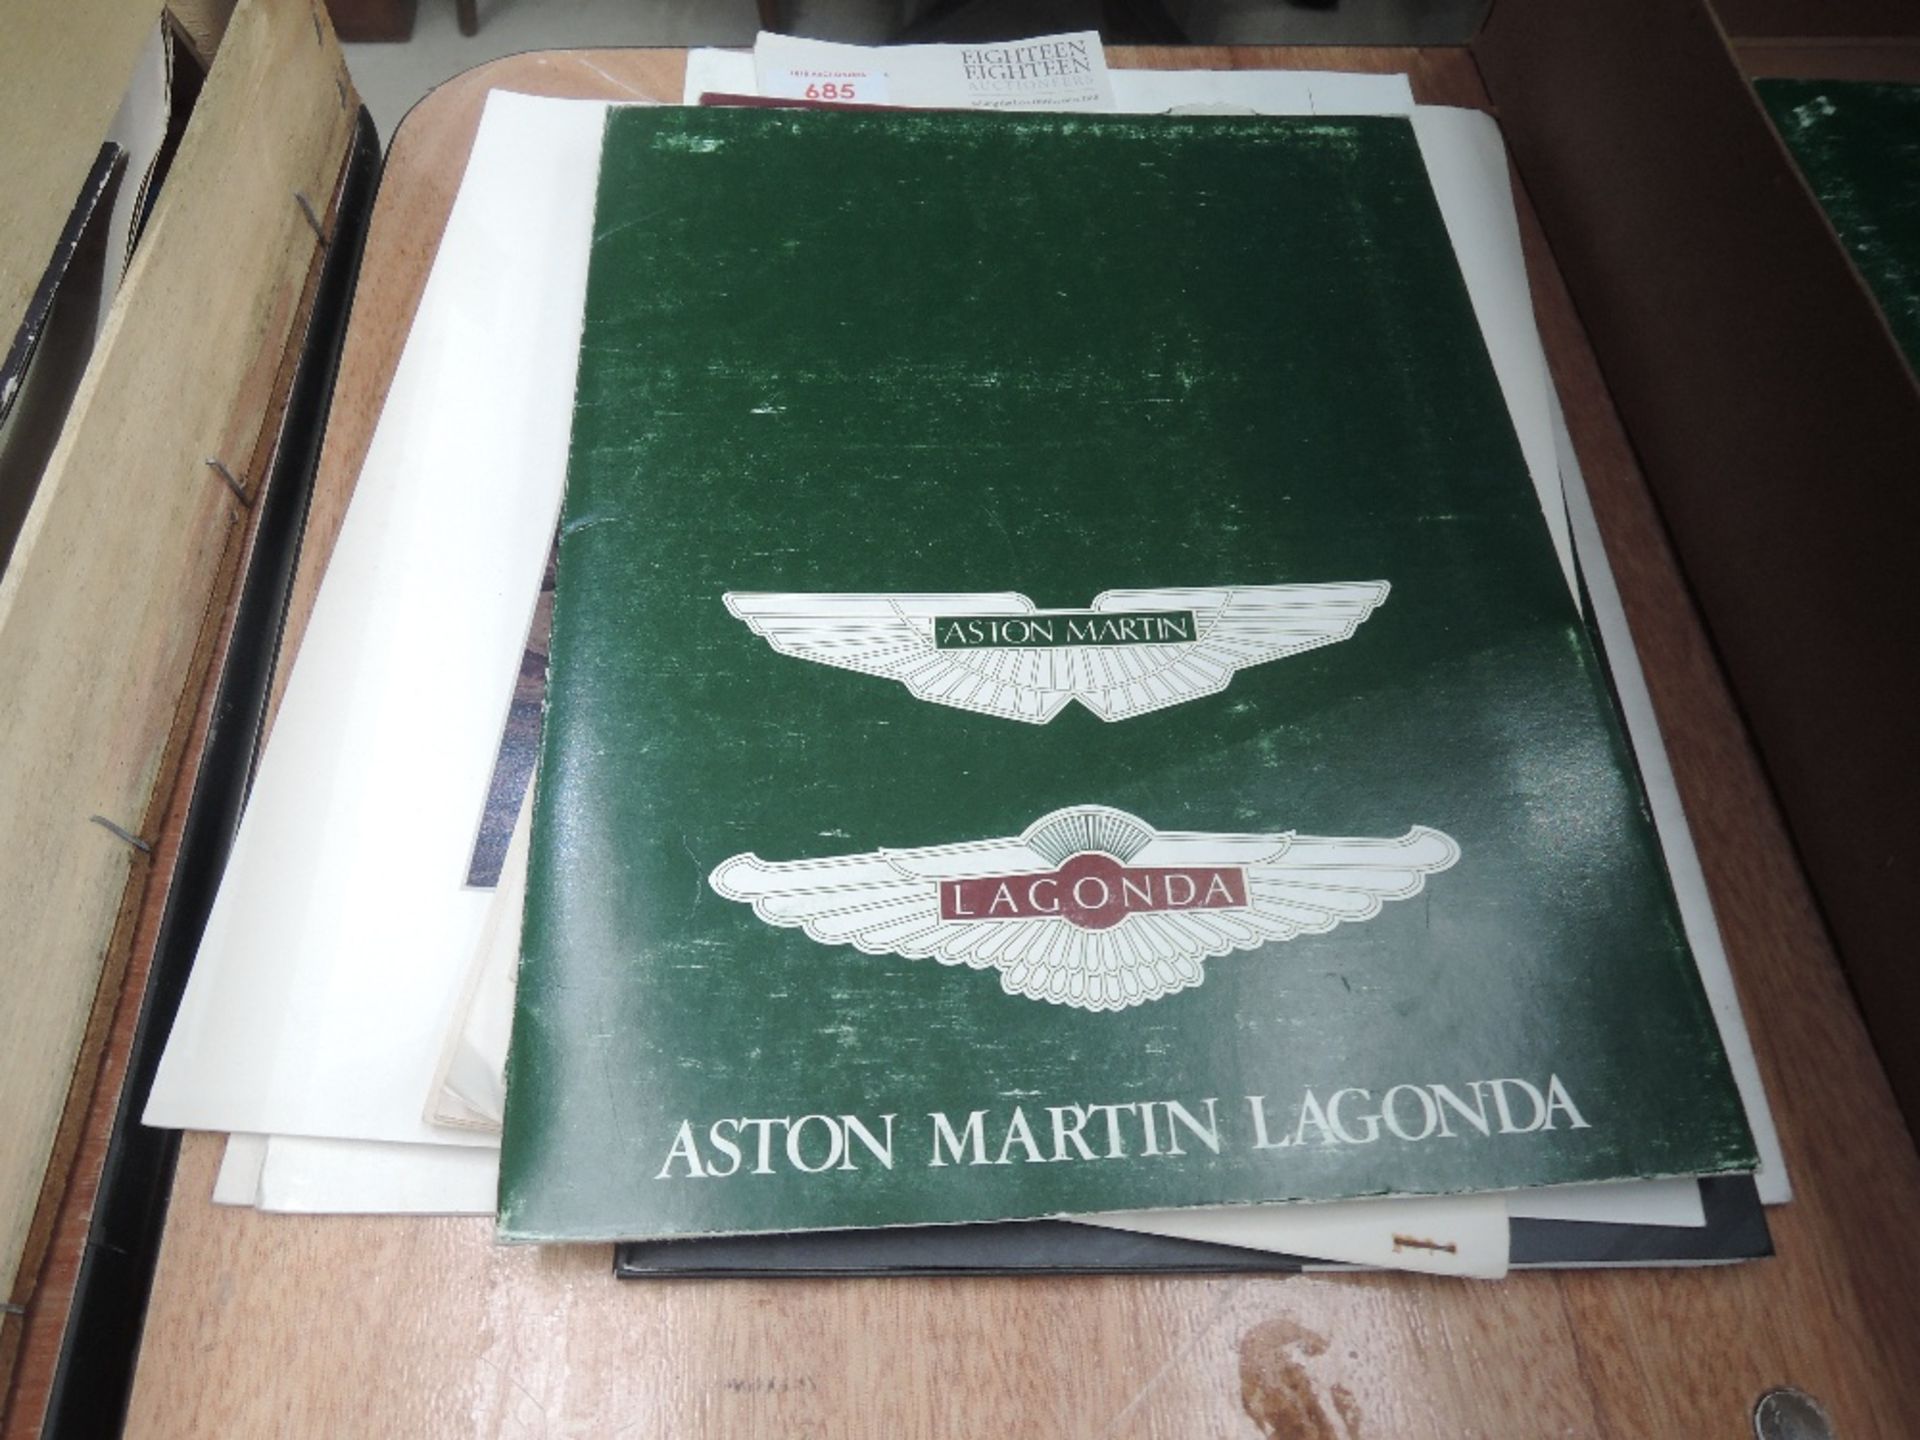 A small collection ephemera for Aston Martin and Lagonda.